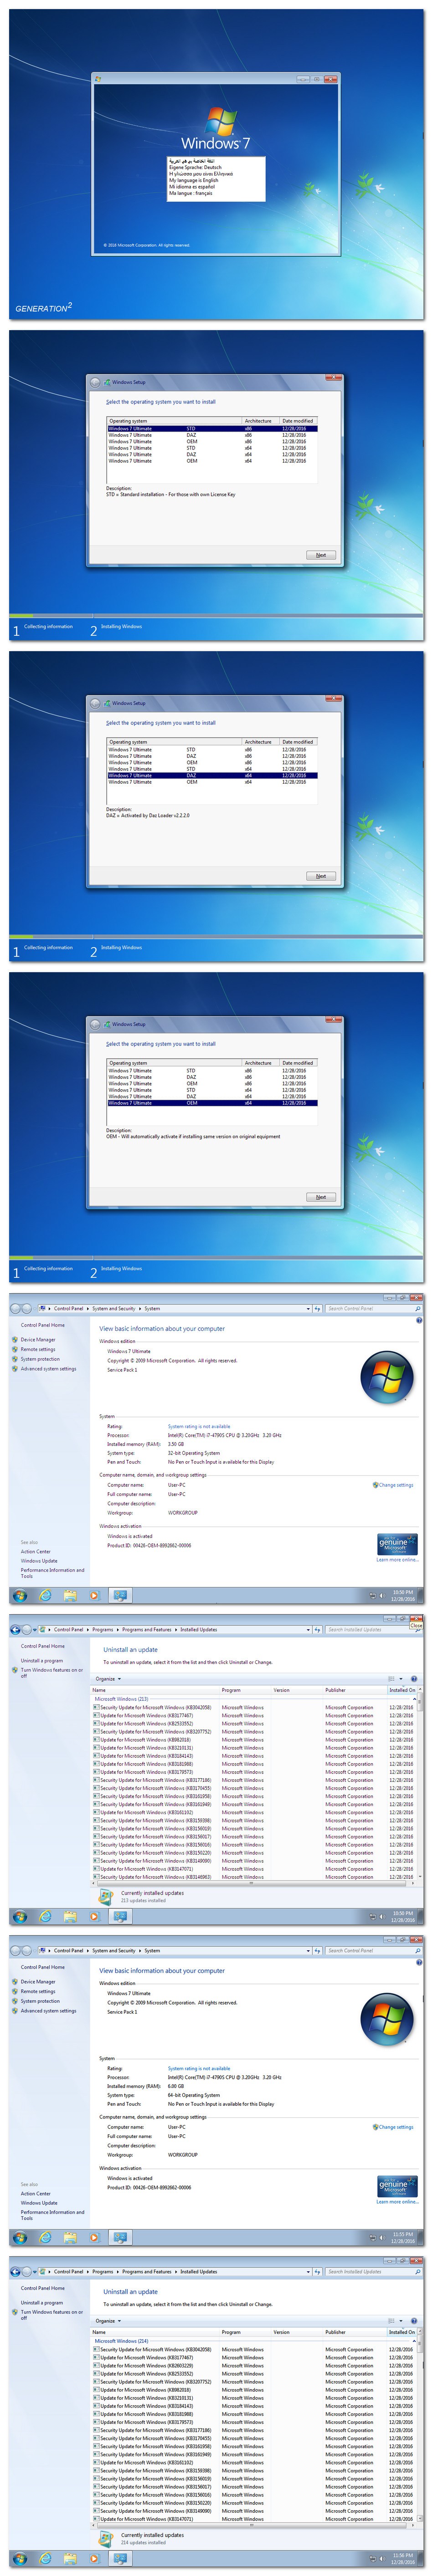 windows loader 2.2.2 by daz download